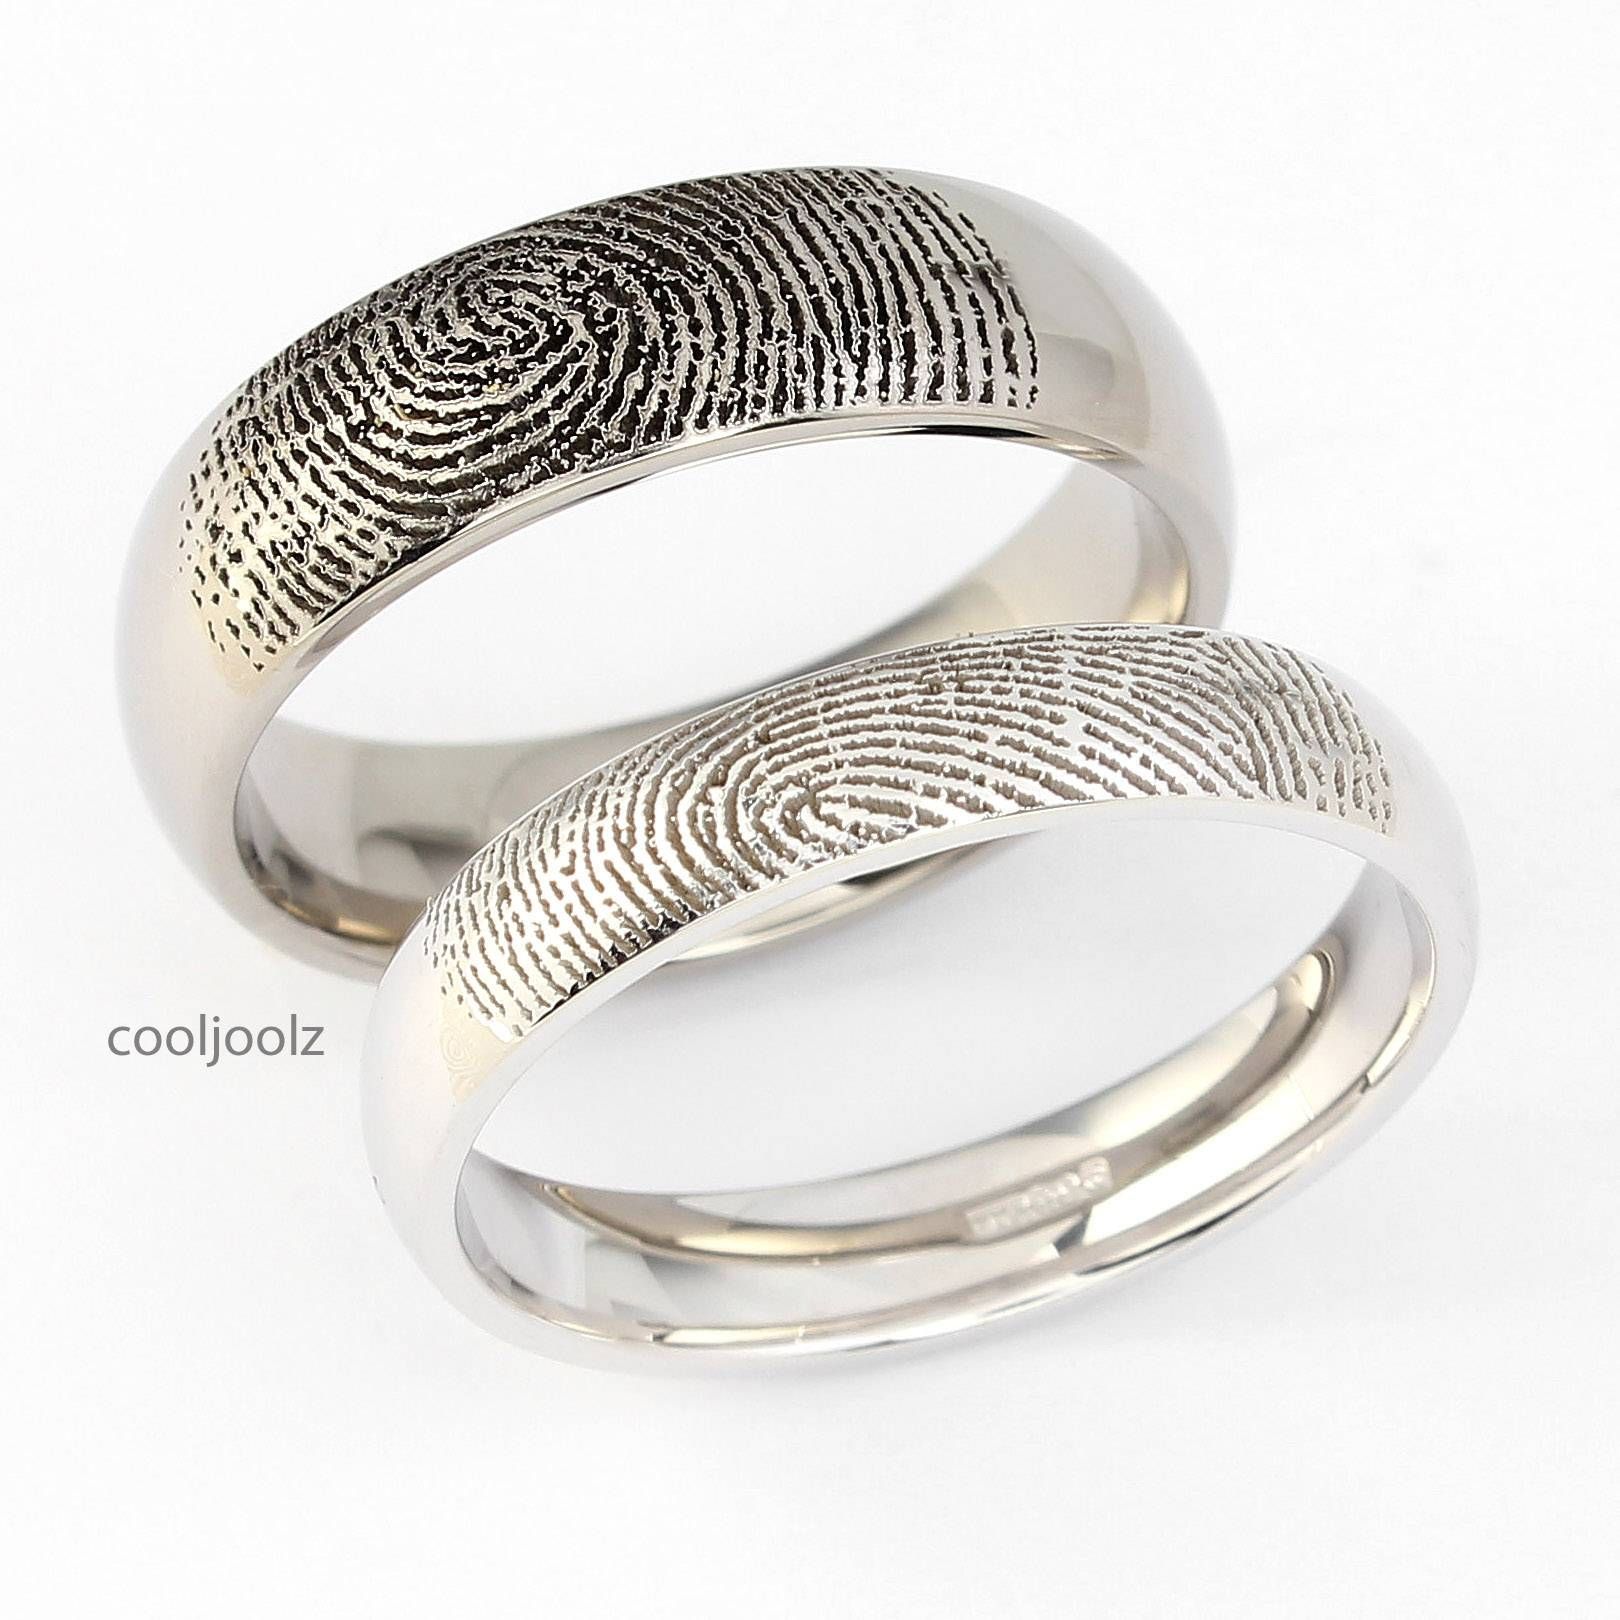 Cooljoolz | Wedding Rings Leedswedding Rings Bradford | Engagement With Regard To Wedding Rings With Fingerprint (View 9 of 15)